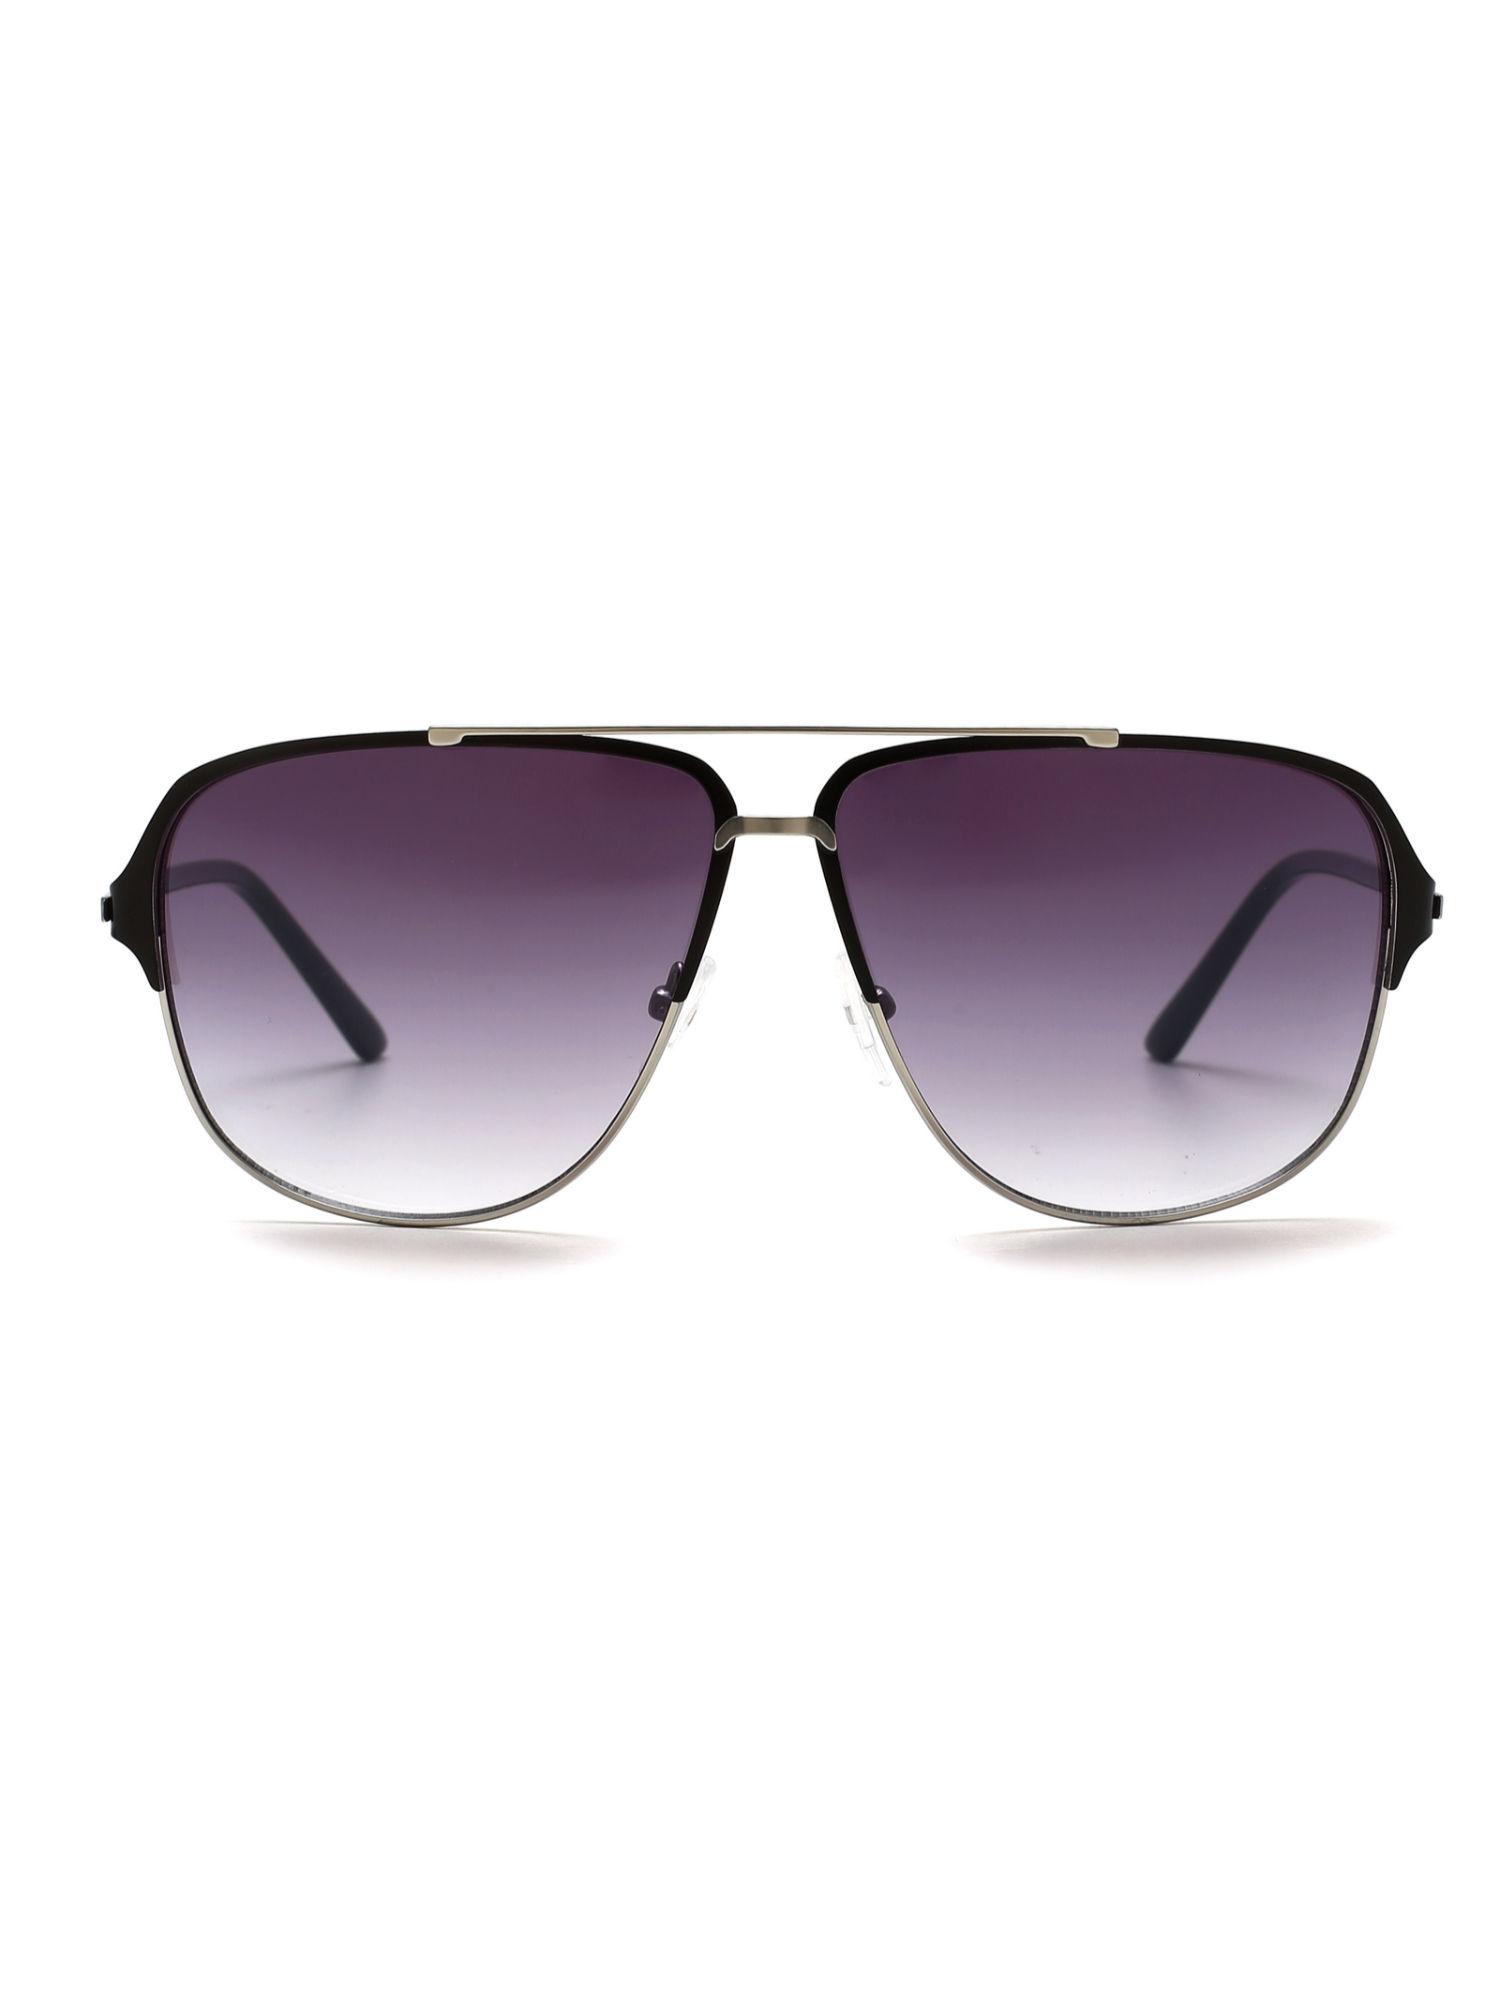 Navigator Sunglasses with Purple Lens for Men